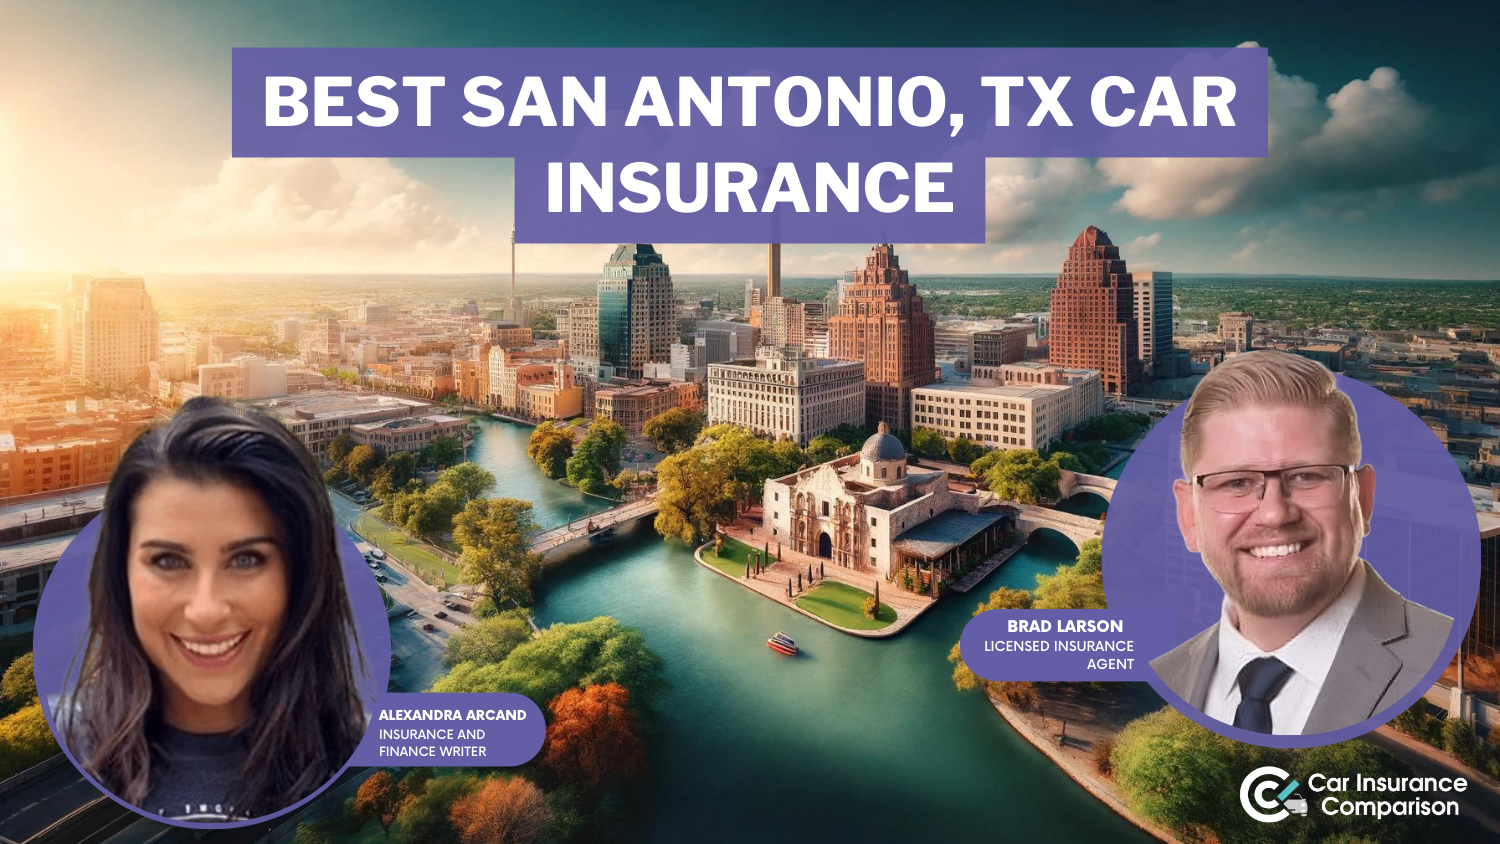 Best San Antonio, TX Car Insurance: State Farm, Geico, and Allstate